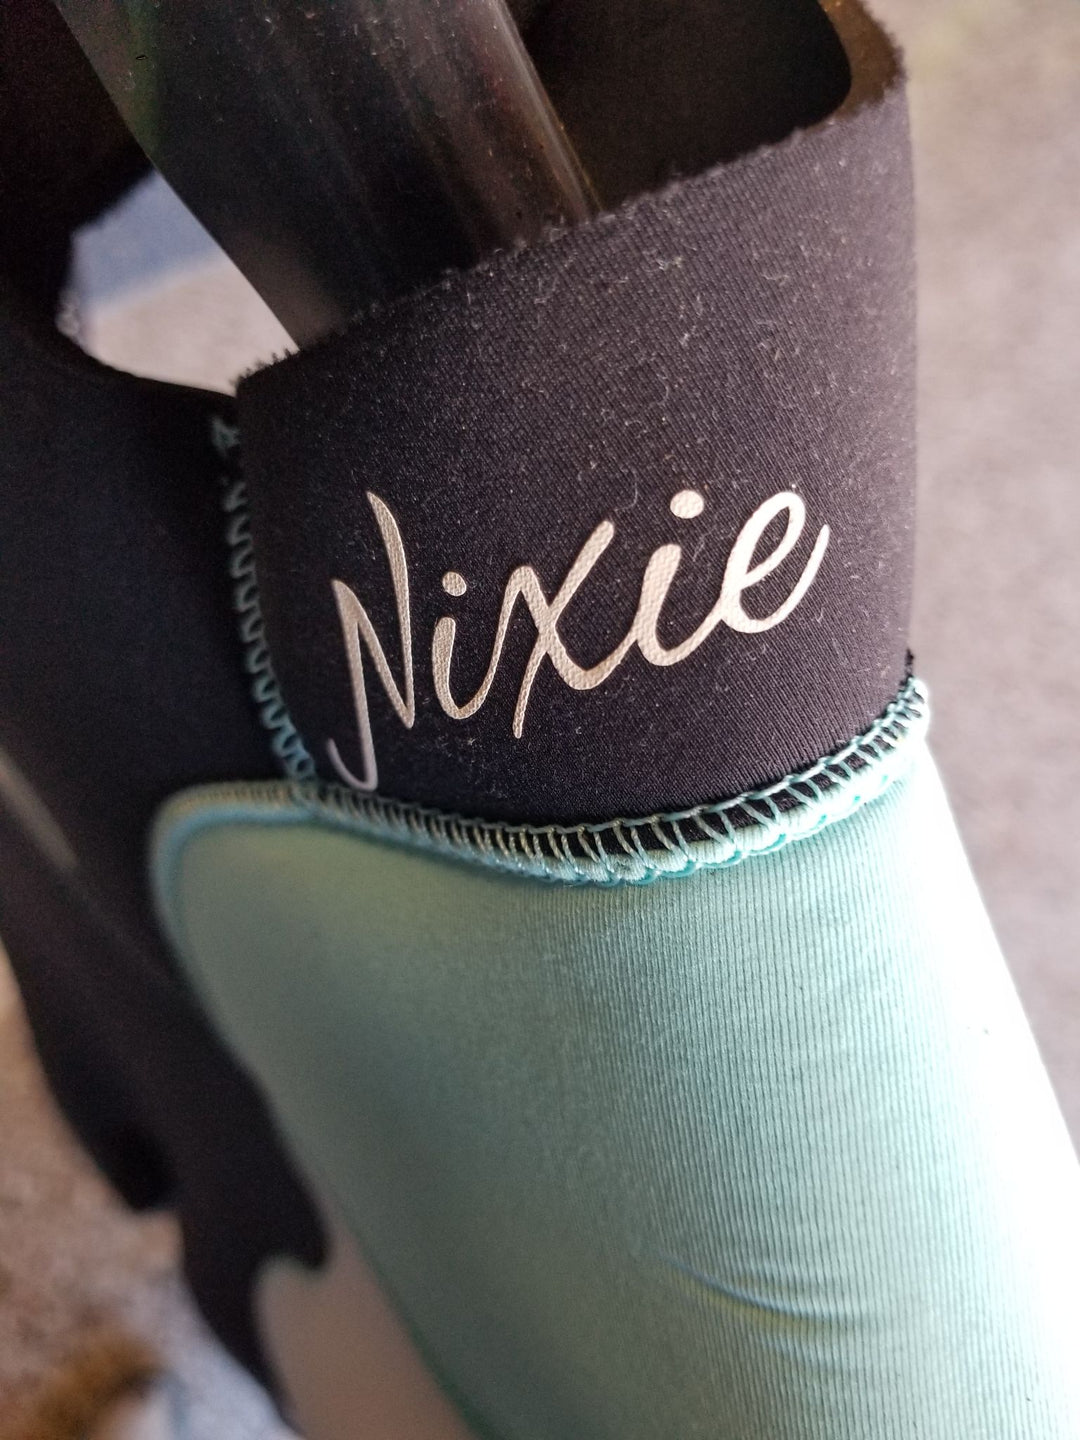 5mm Nixie Women's Wetsuit